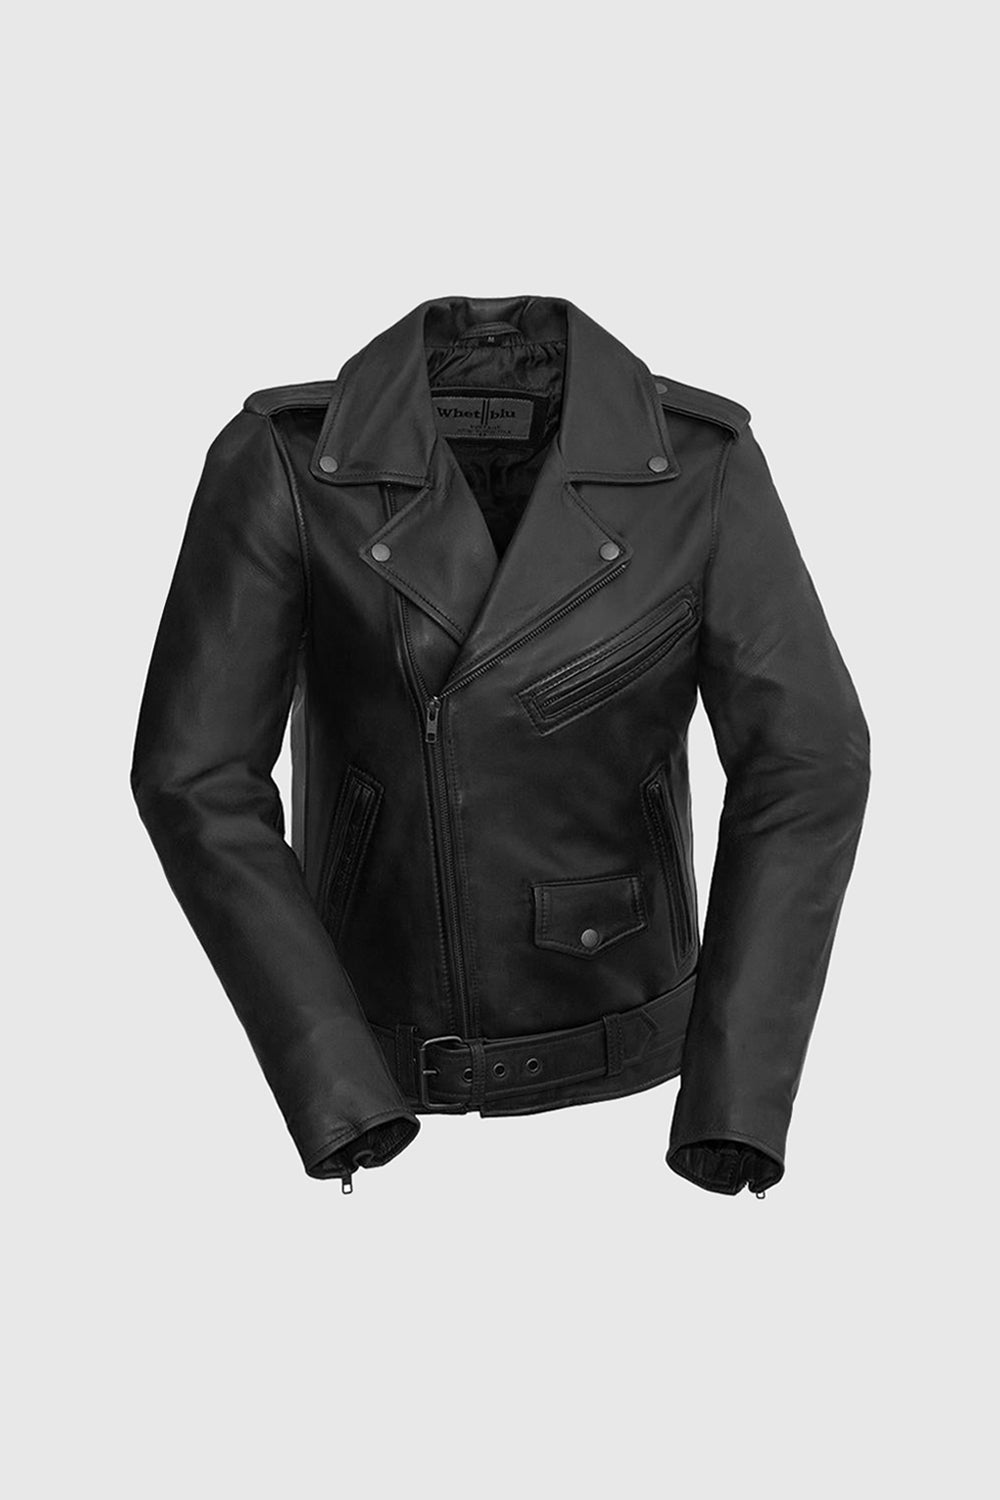 Rebel Womens Leather Jacket Black Women's Leather Jacket Whet Blu NYC XS  